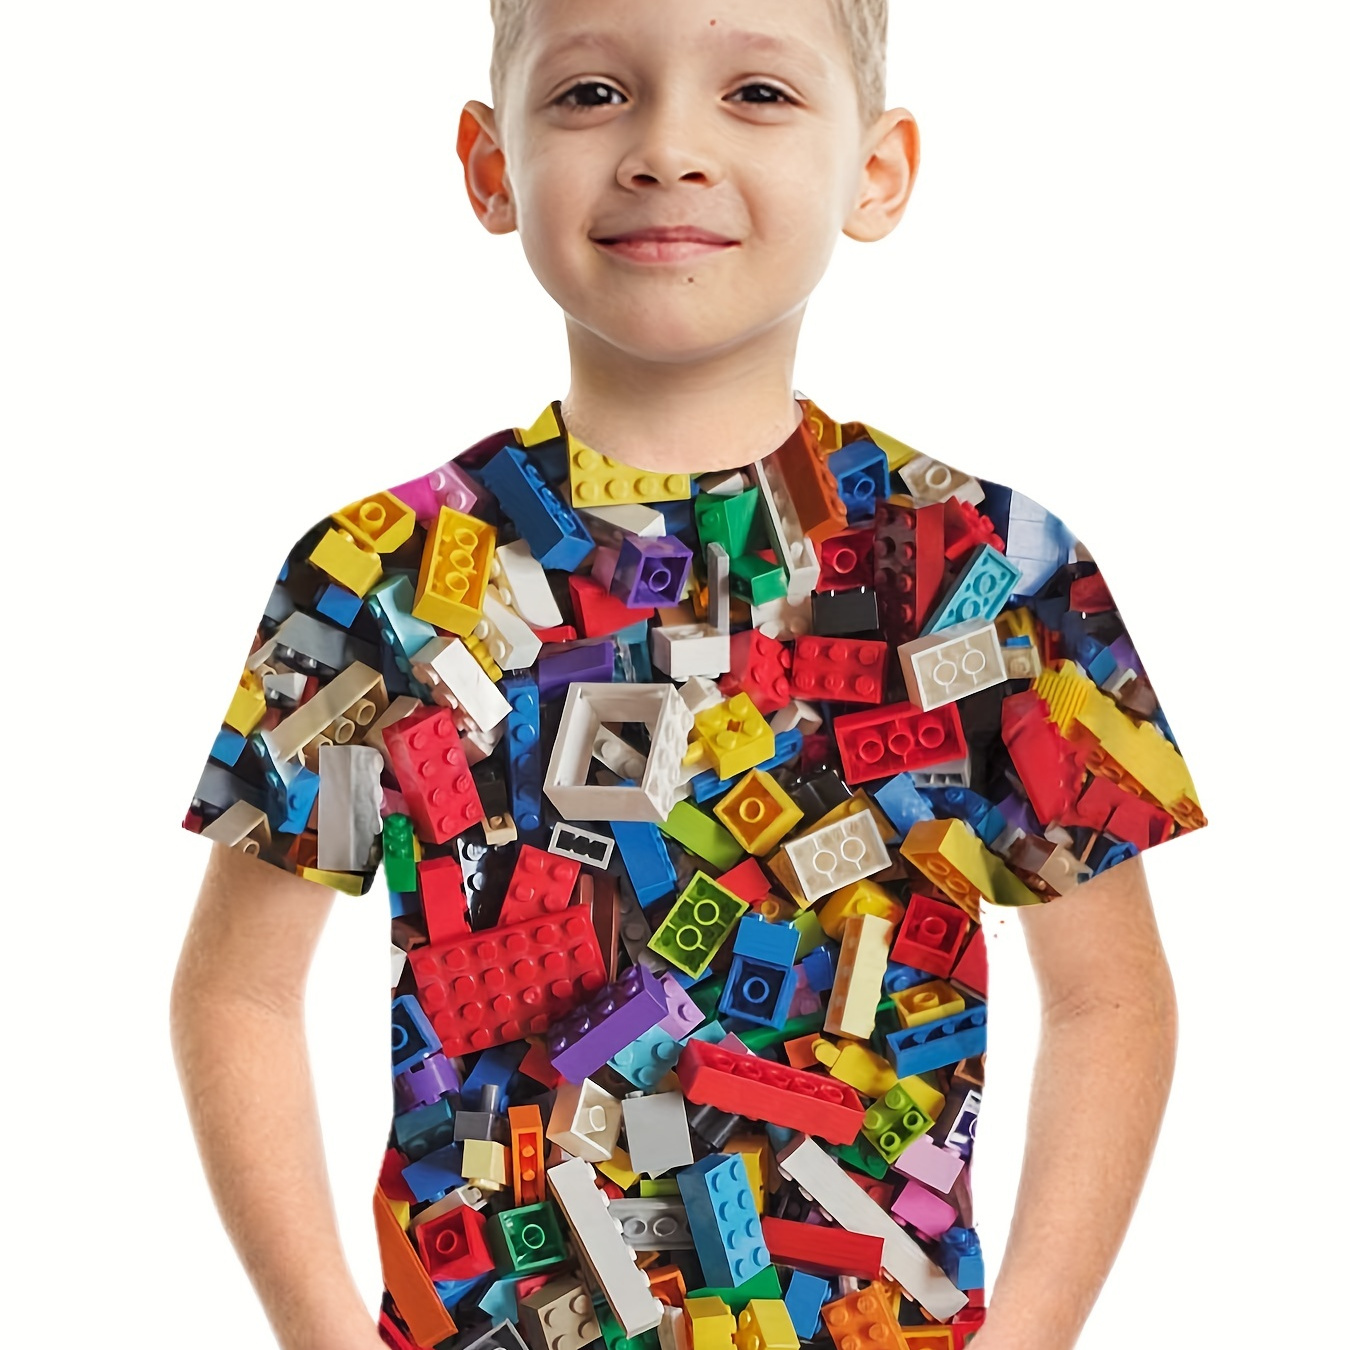 

Cool Rainbow Building Blocks 3d Print Boys Creative T-shirt, Casual Lightweight Comfy Short Sleeve Tee Tops, Kids Clothings For Summer